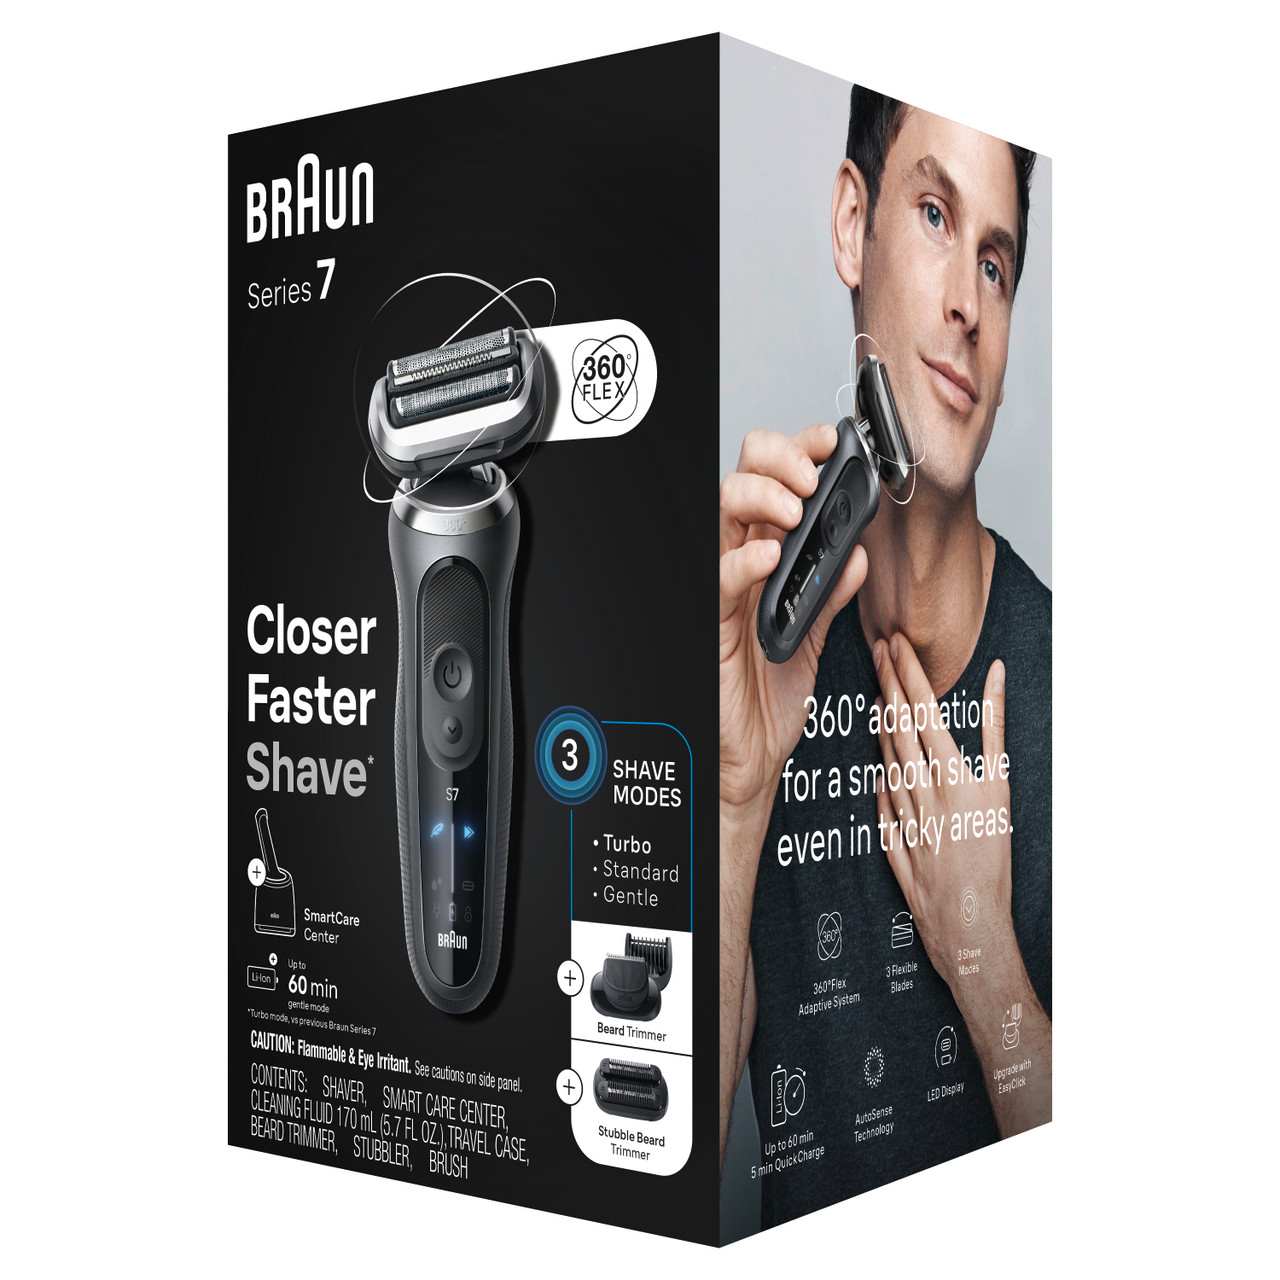 Series 7 Electric Shaver with SmartCare Center, Stubbler, Trimmer